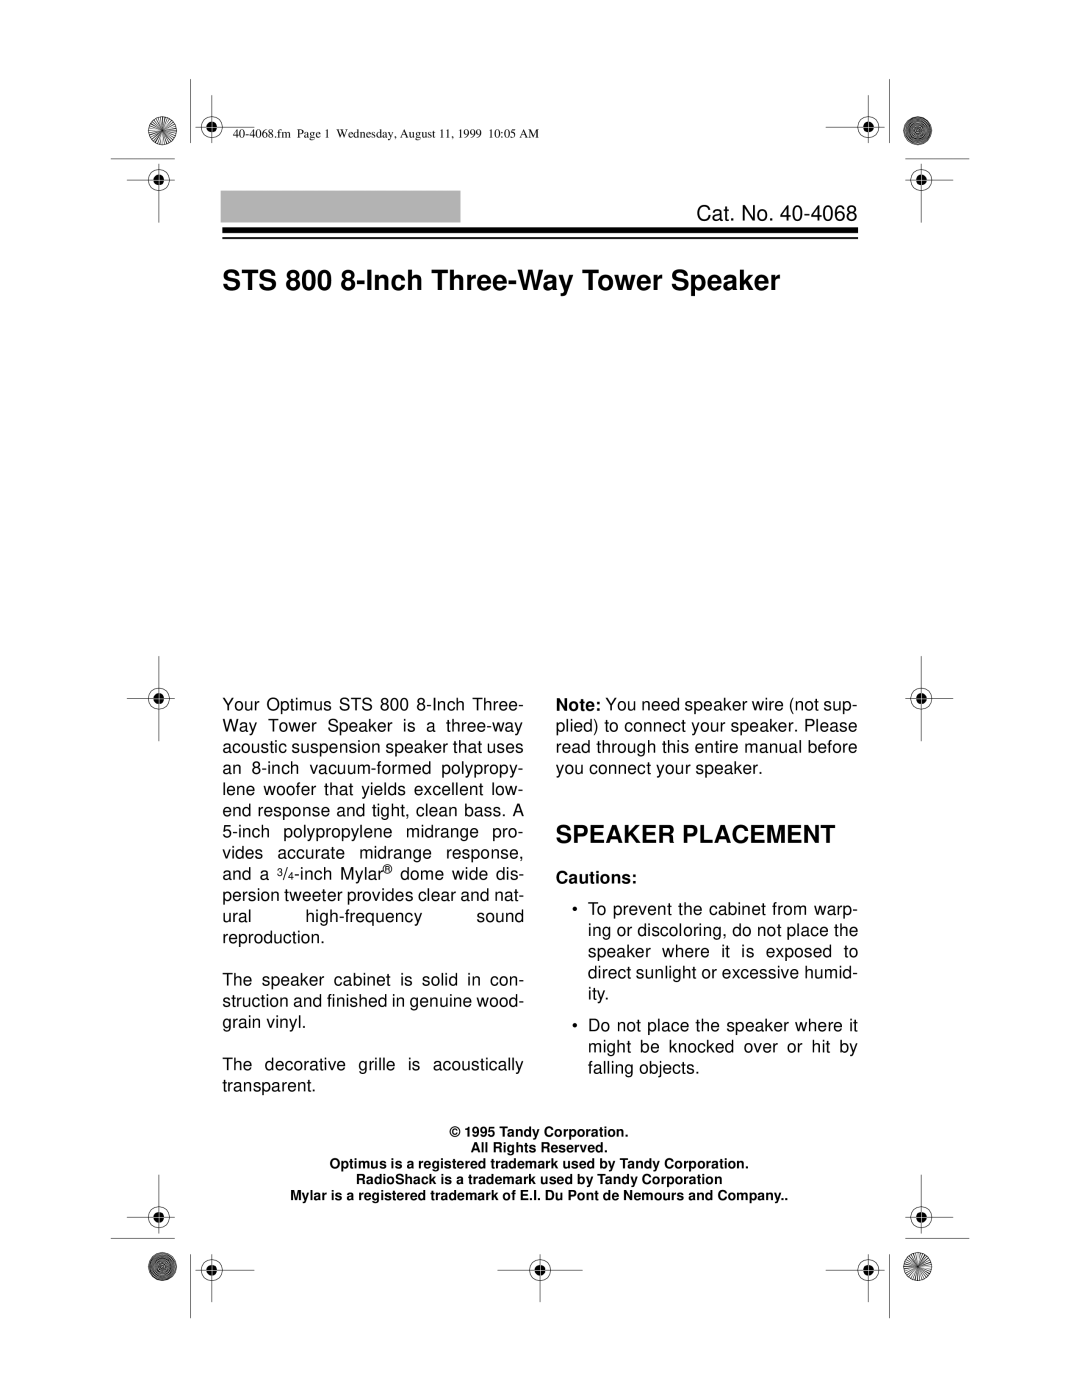 Radio Shack manual Speaker Placement, Cautions, STS 800 8-Inch Three-WayTower Speaker, Cat. No 